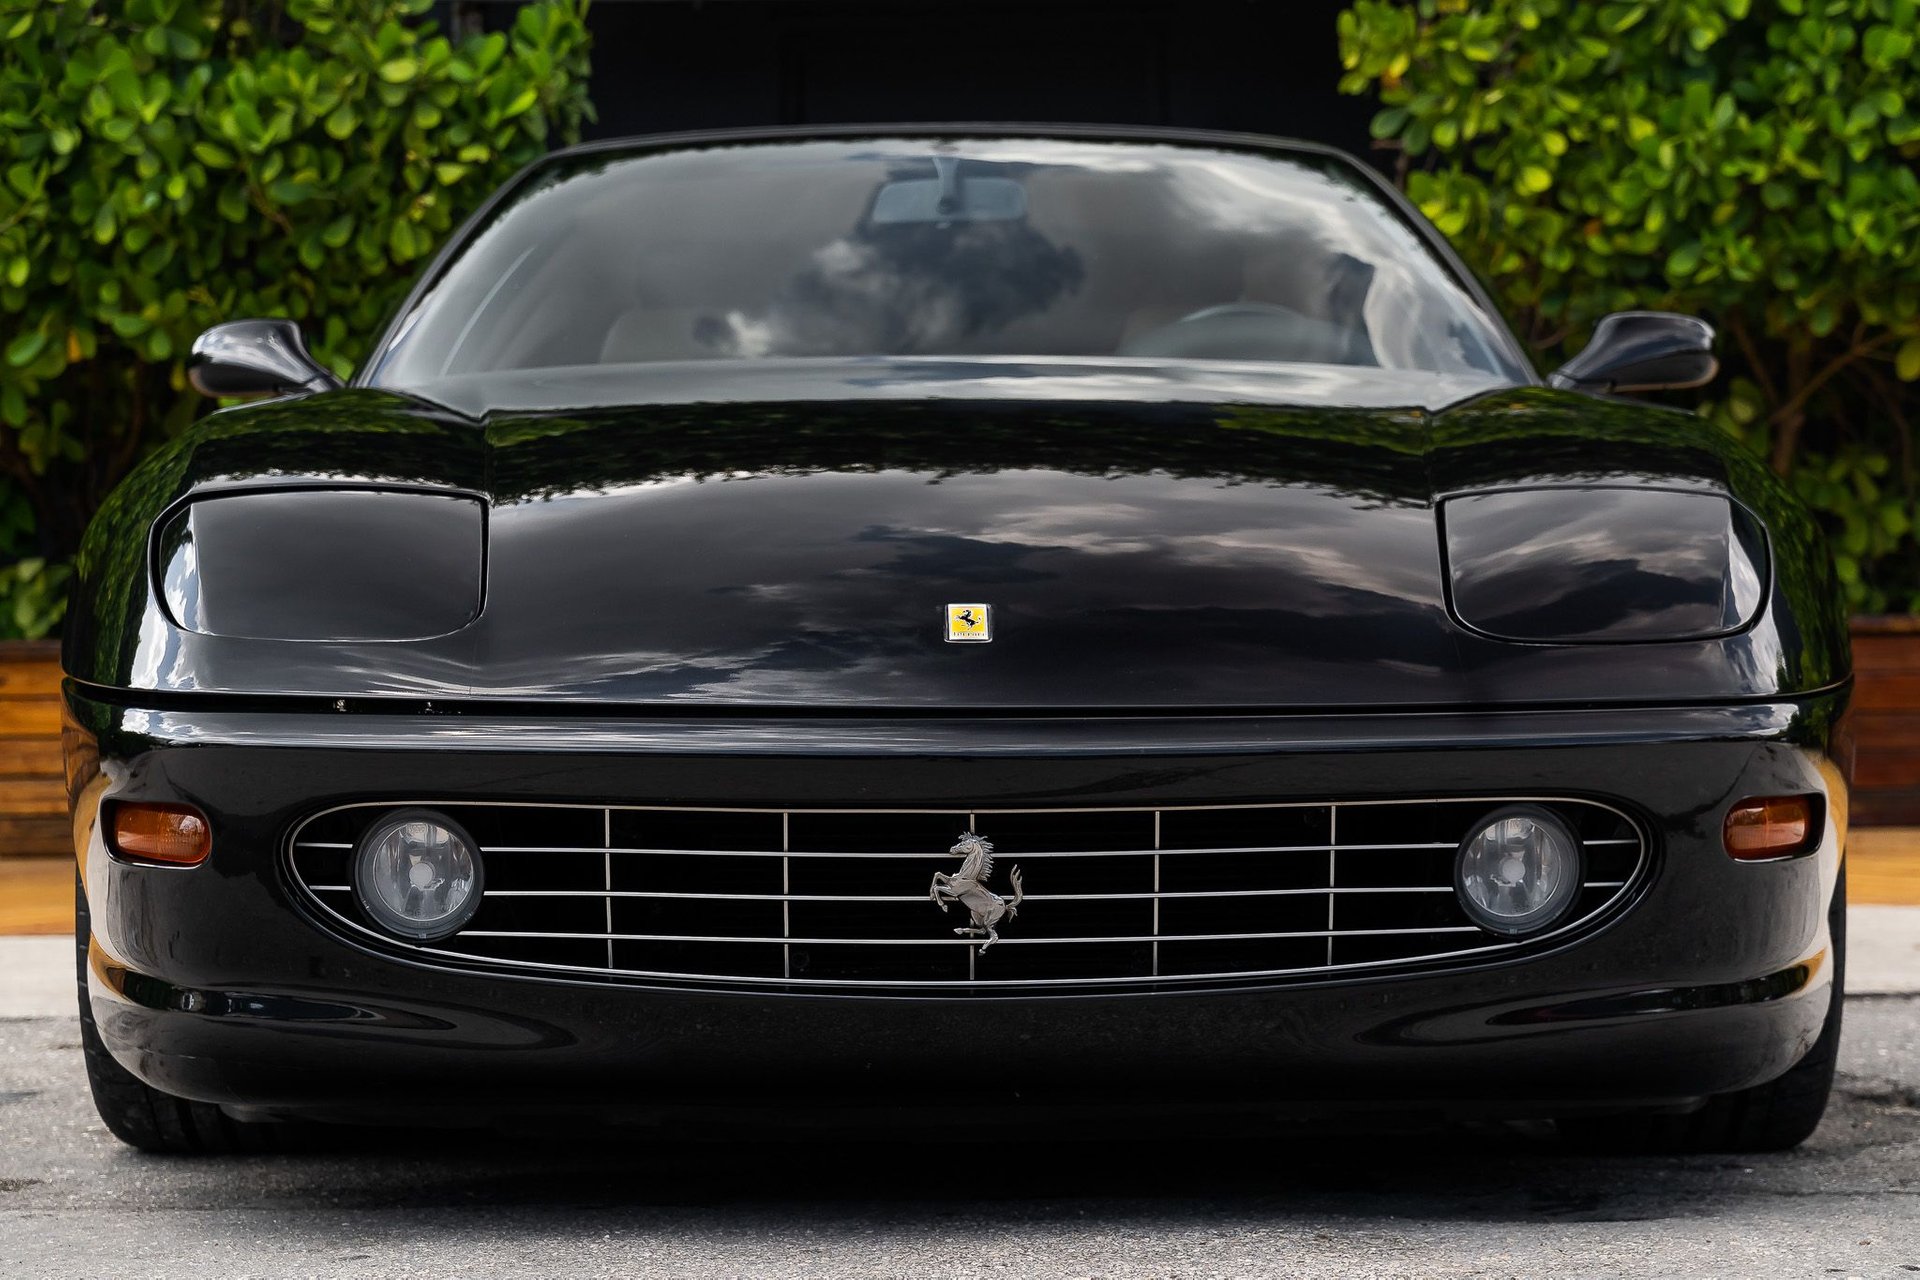 2002 Ferrari 456M | Classic Car Gallery: Exotic & Vintage Cars - Motorcar  Gallery